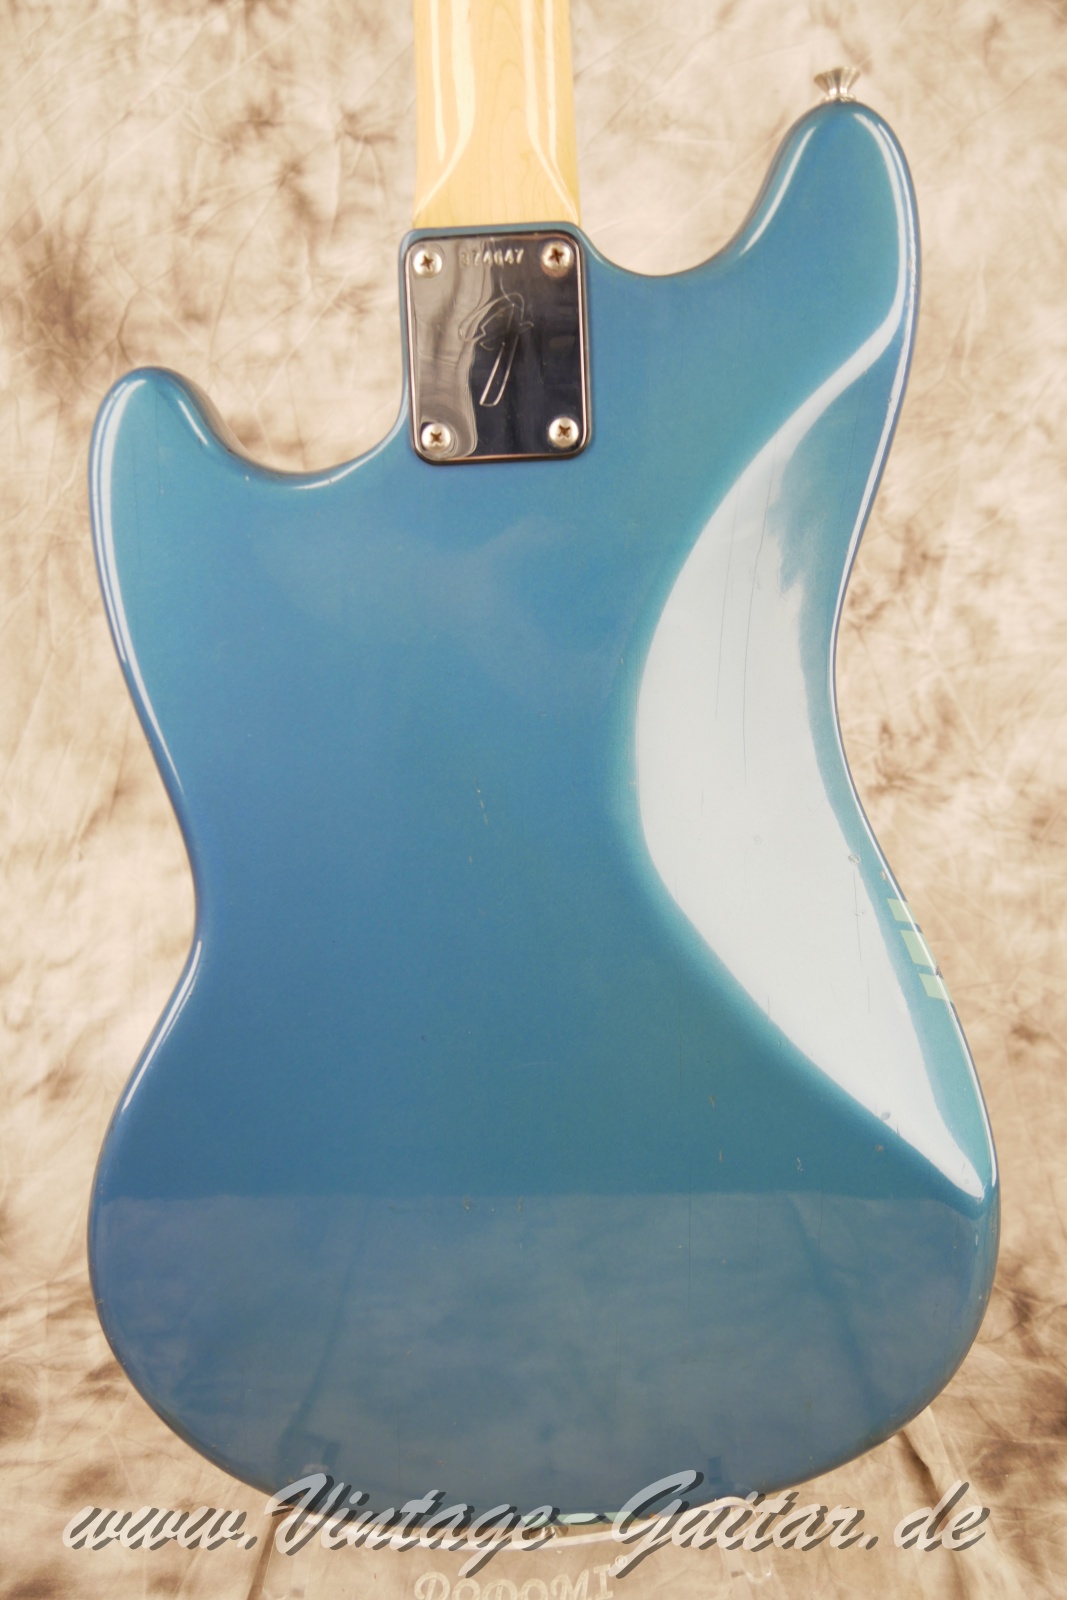 Fender-Mustang-Competition-1973-lake-placid-blue-004.JPG